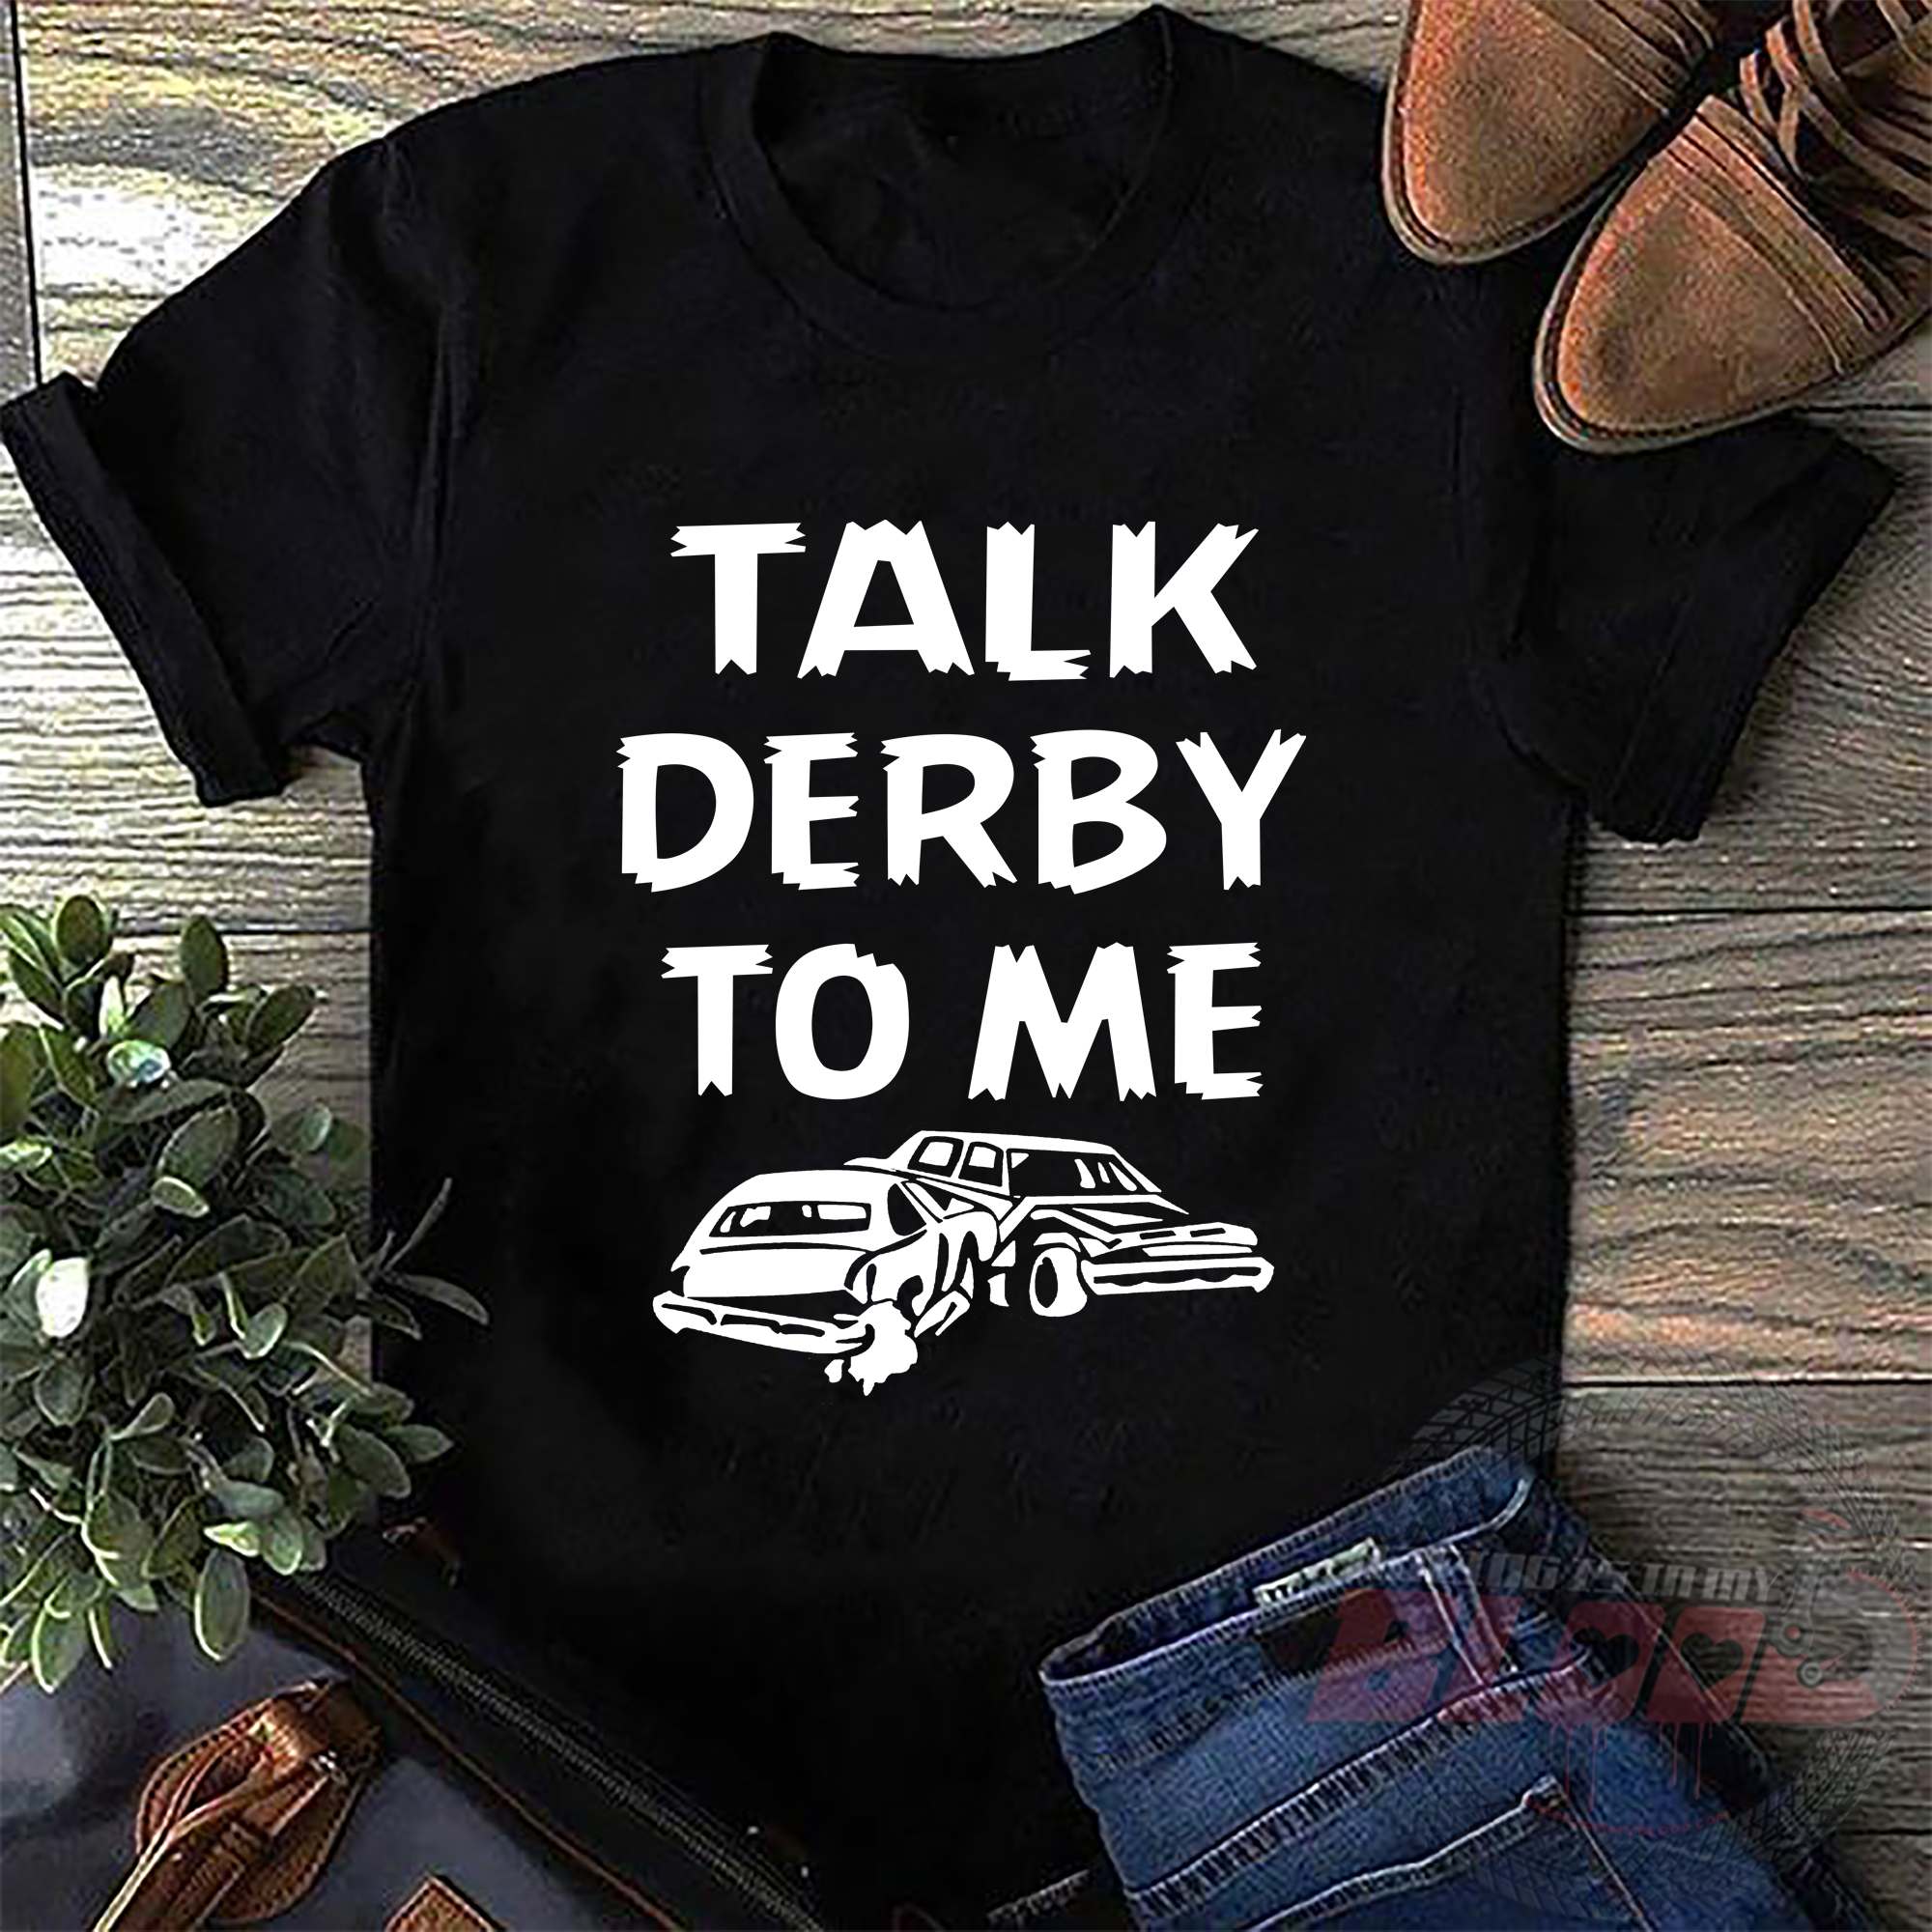 Talk derby to me - Car crashing